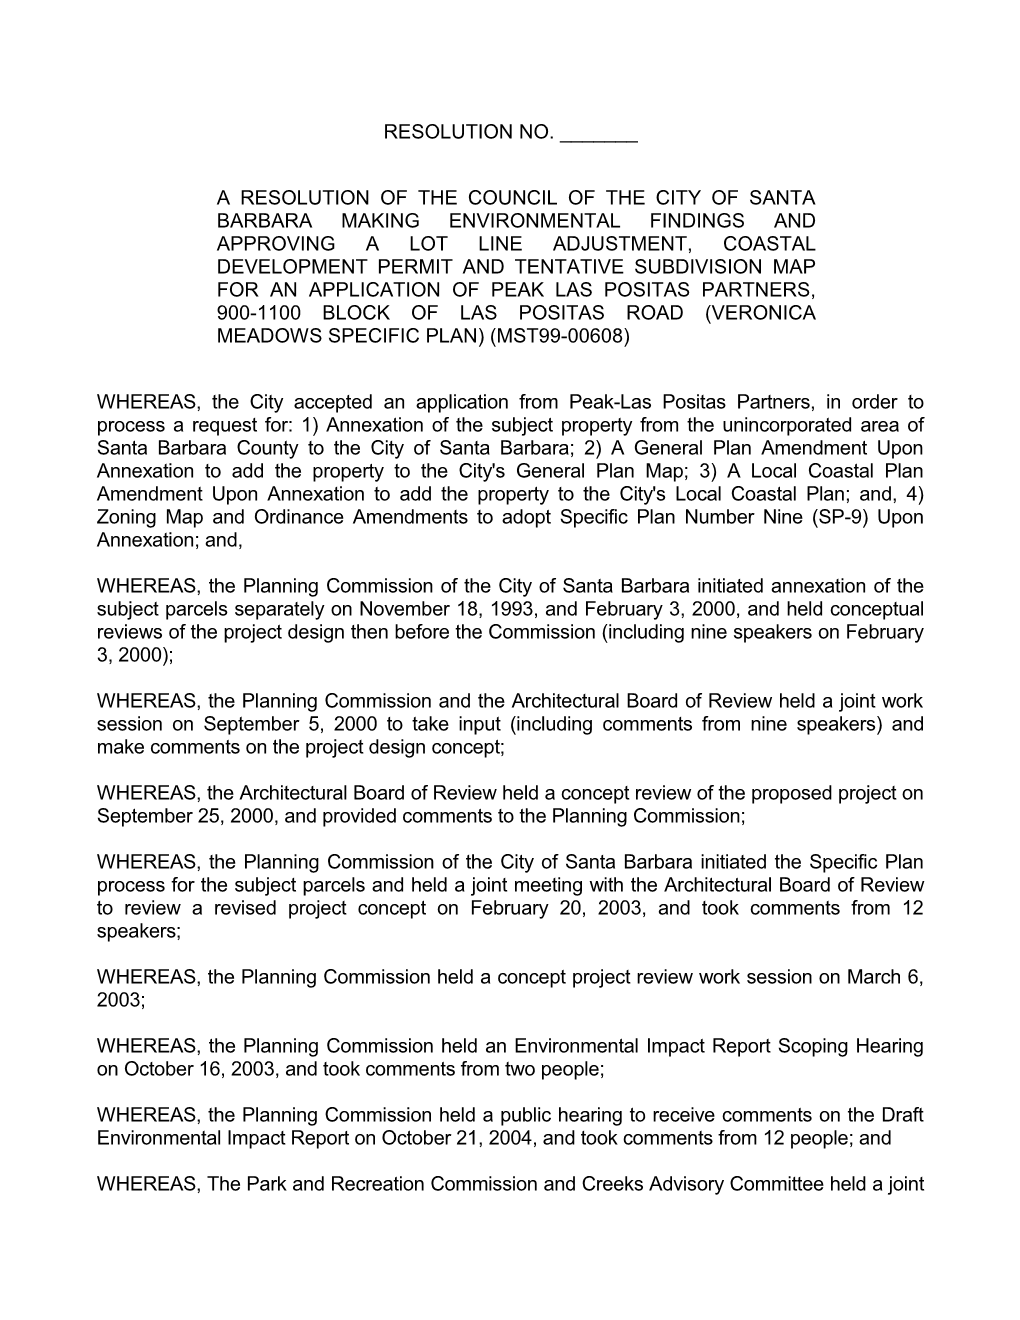 A Resolution of the Council of the City of Santa Barbara Making Environmental Findings